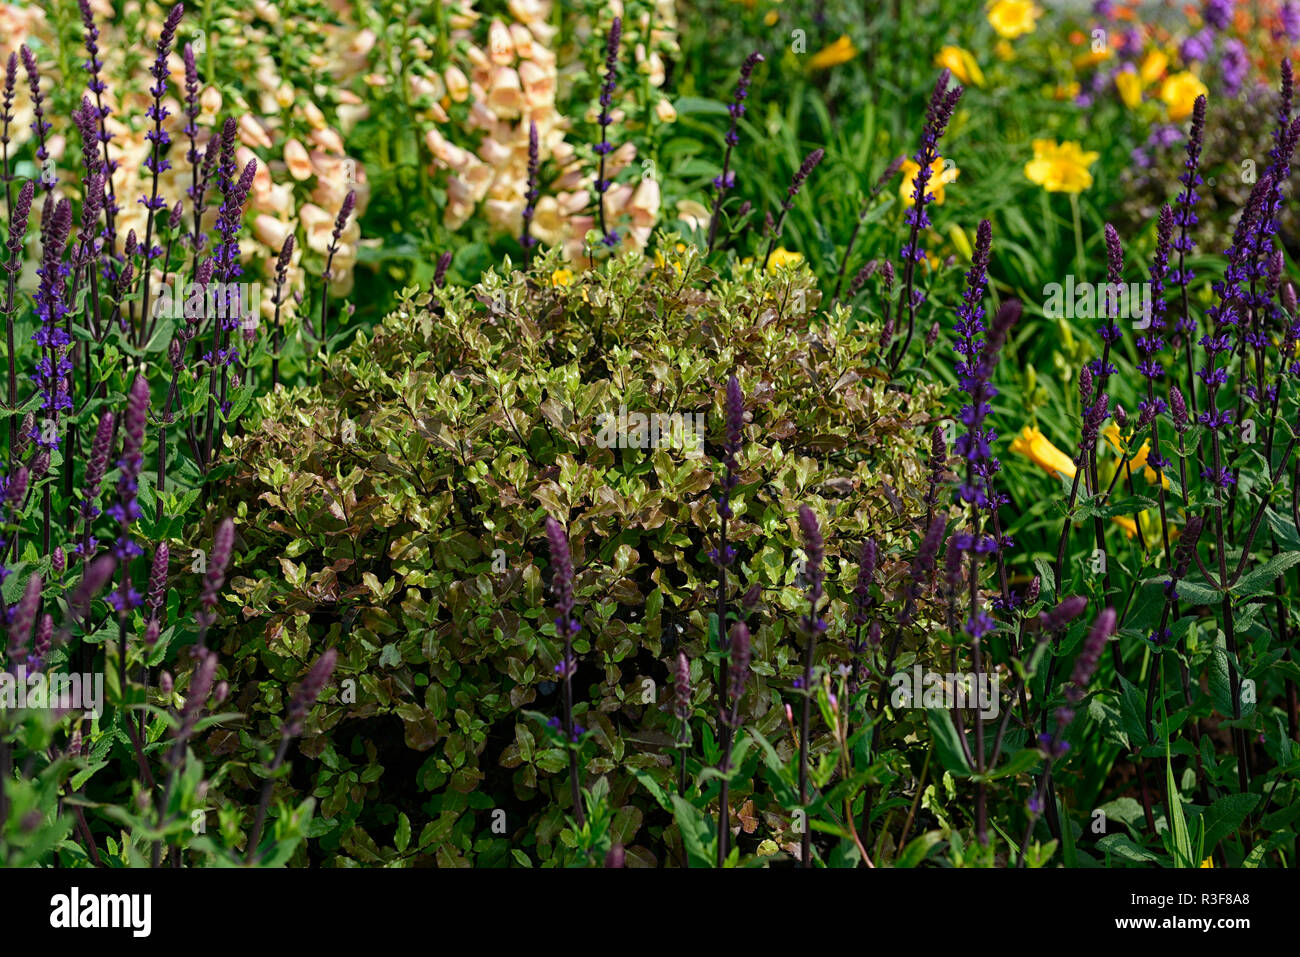 pittosporum tenuifolium,green,purple,foliage,leaves,evergreen,evergreens,shrub,shrubs,foliage,leaves,contrast,ball,dome,shape,shaped,RM Floral Stock Photo